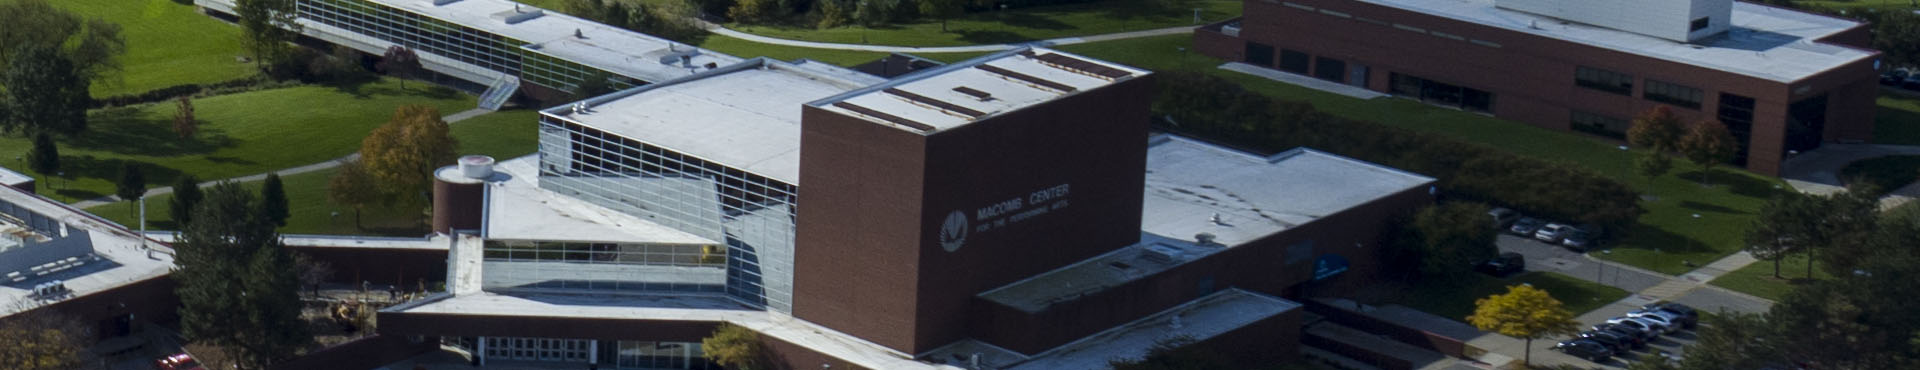 macomb center of performing arts header